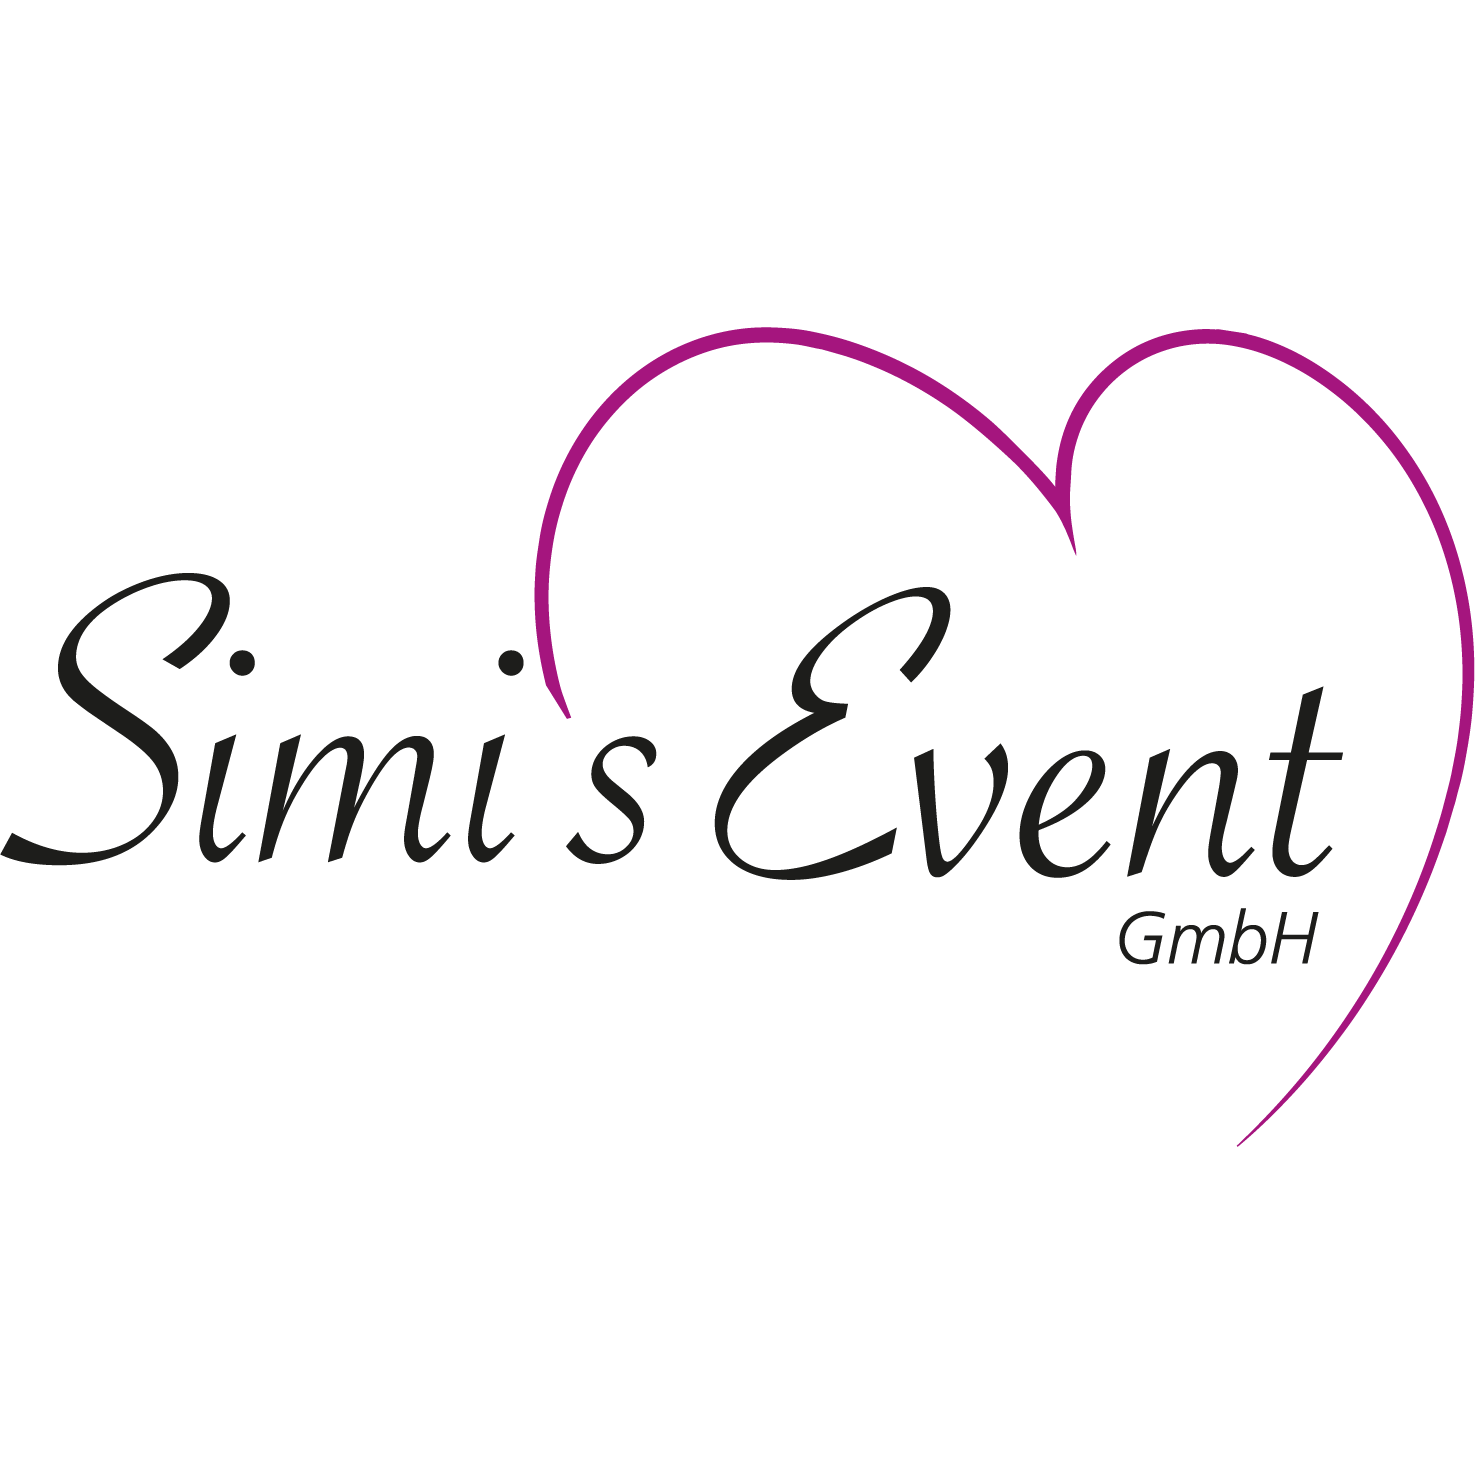 Simi's Event GmbH Logo